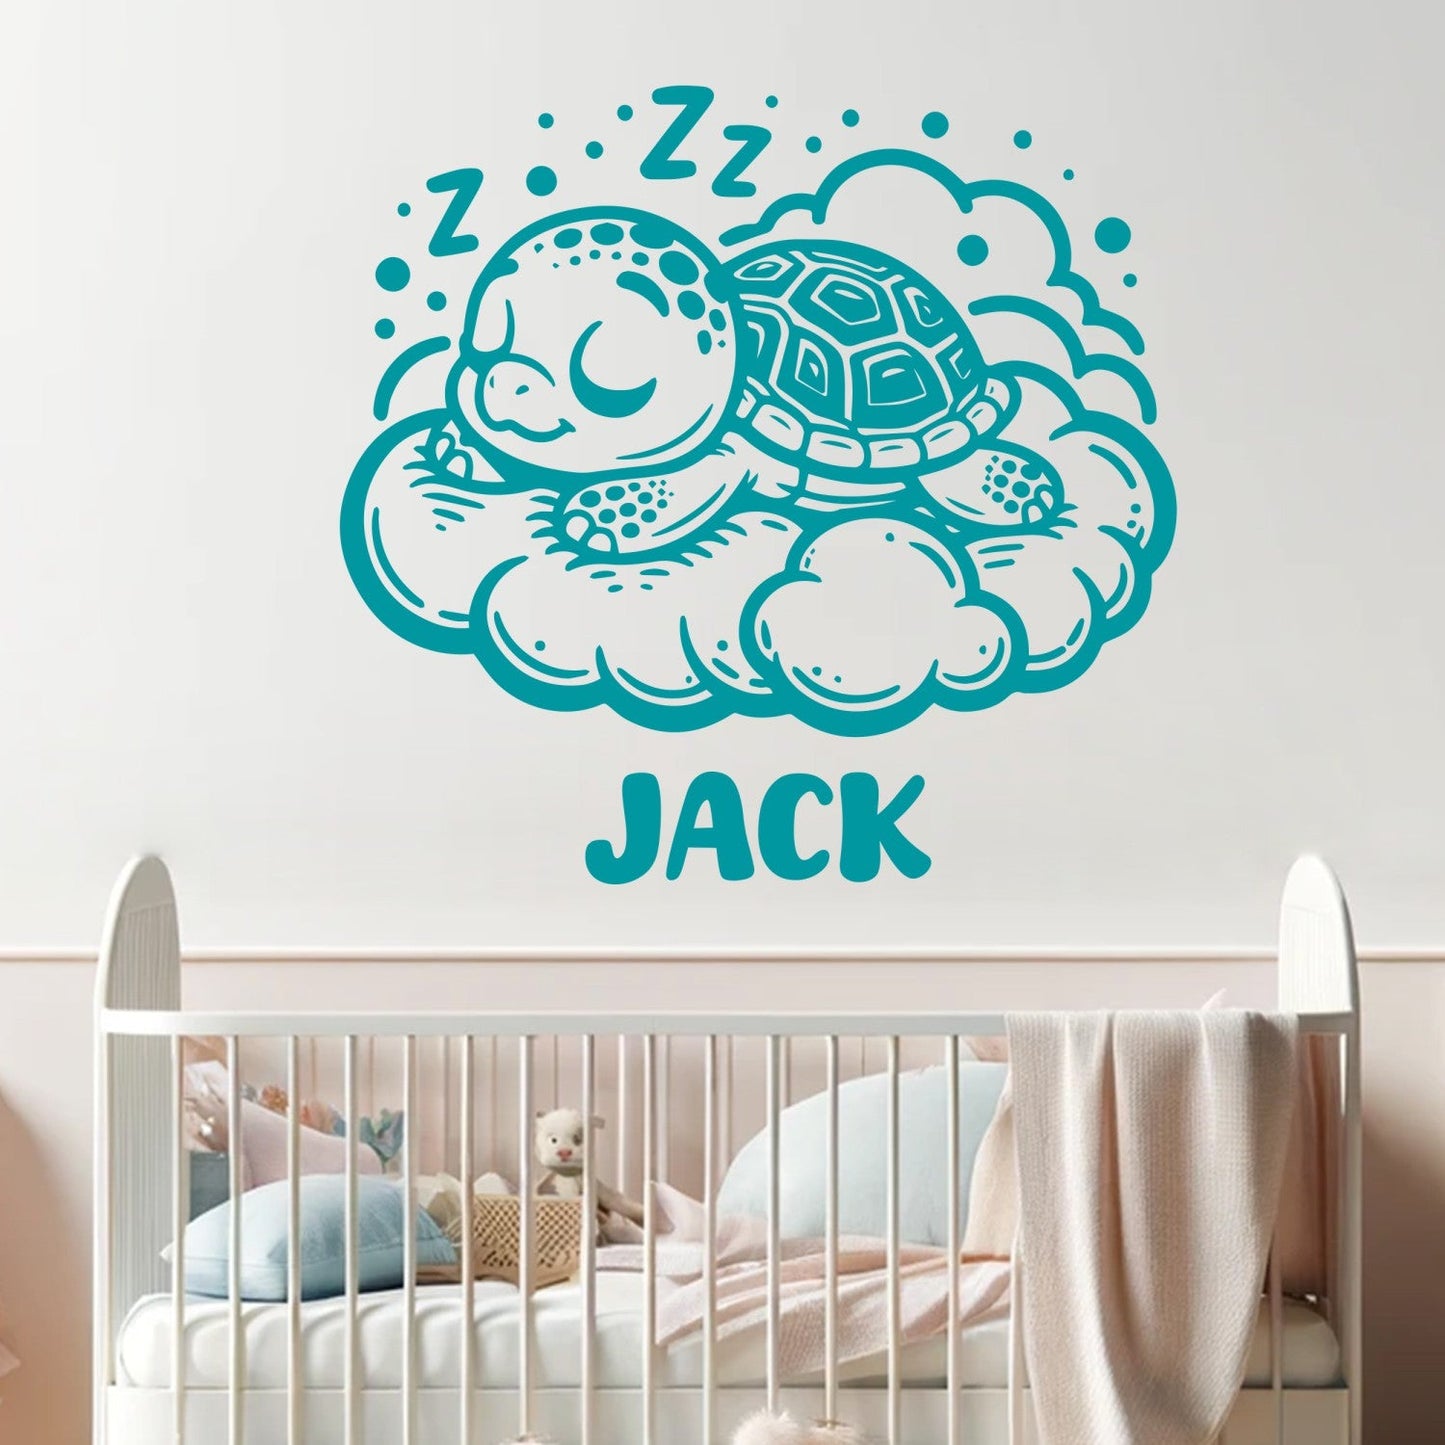 Sea Turtle Wall Stickers - Custom Name Wall Decal - Sea Turtle Vinyl Decal - Personalized Nursery Wall Stickers - Custom Name Decal with Cute Animals Design 01